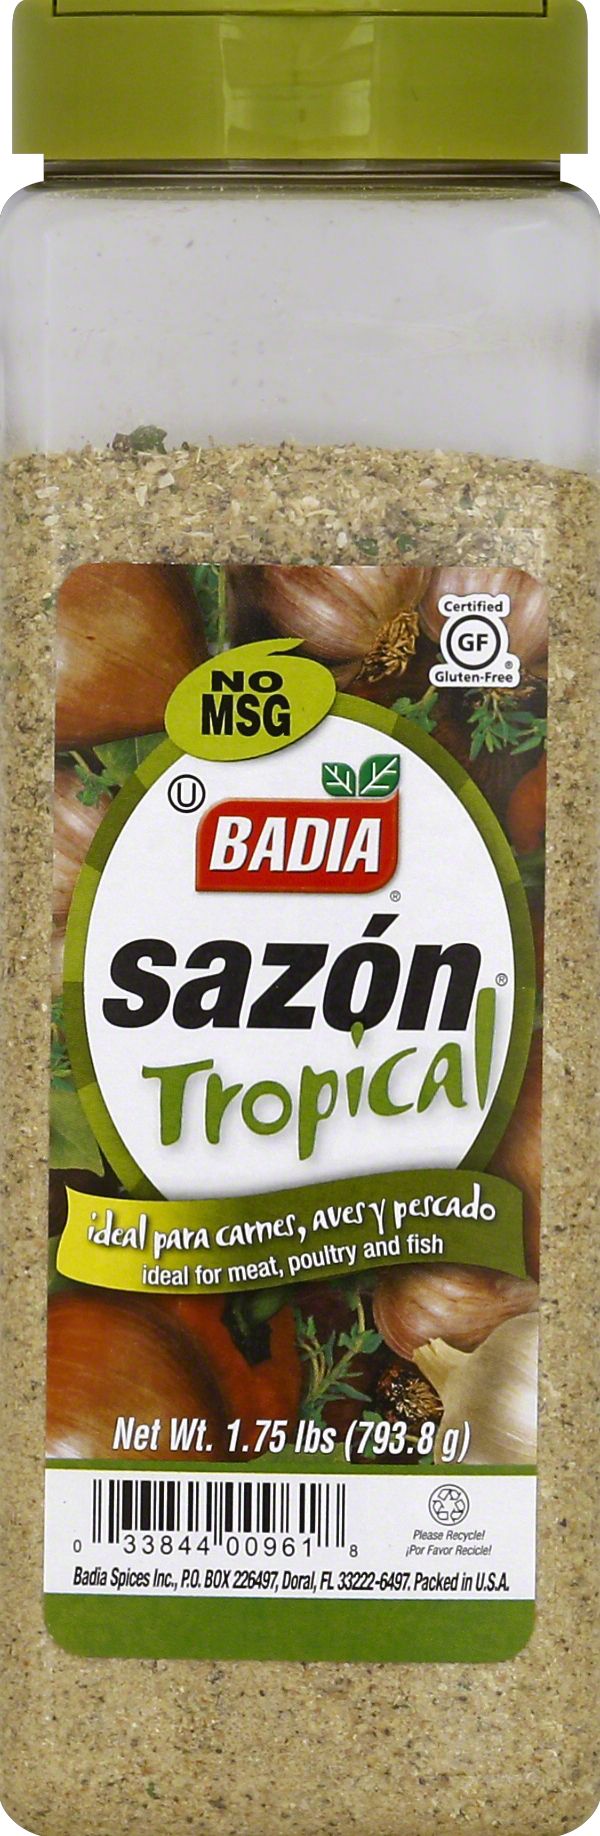 Sweet & Savory Rice - Badia Spices